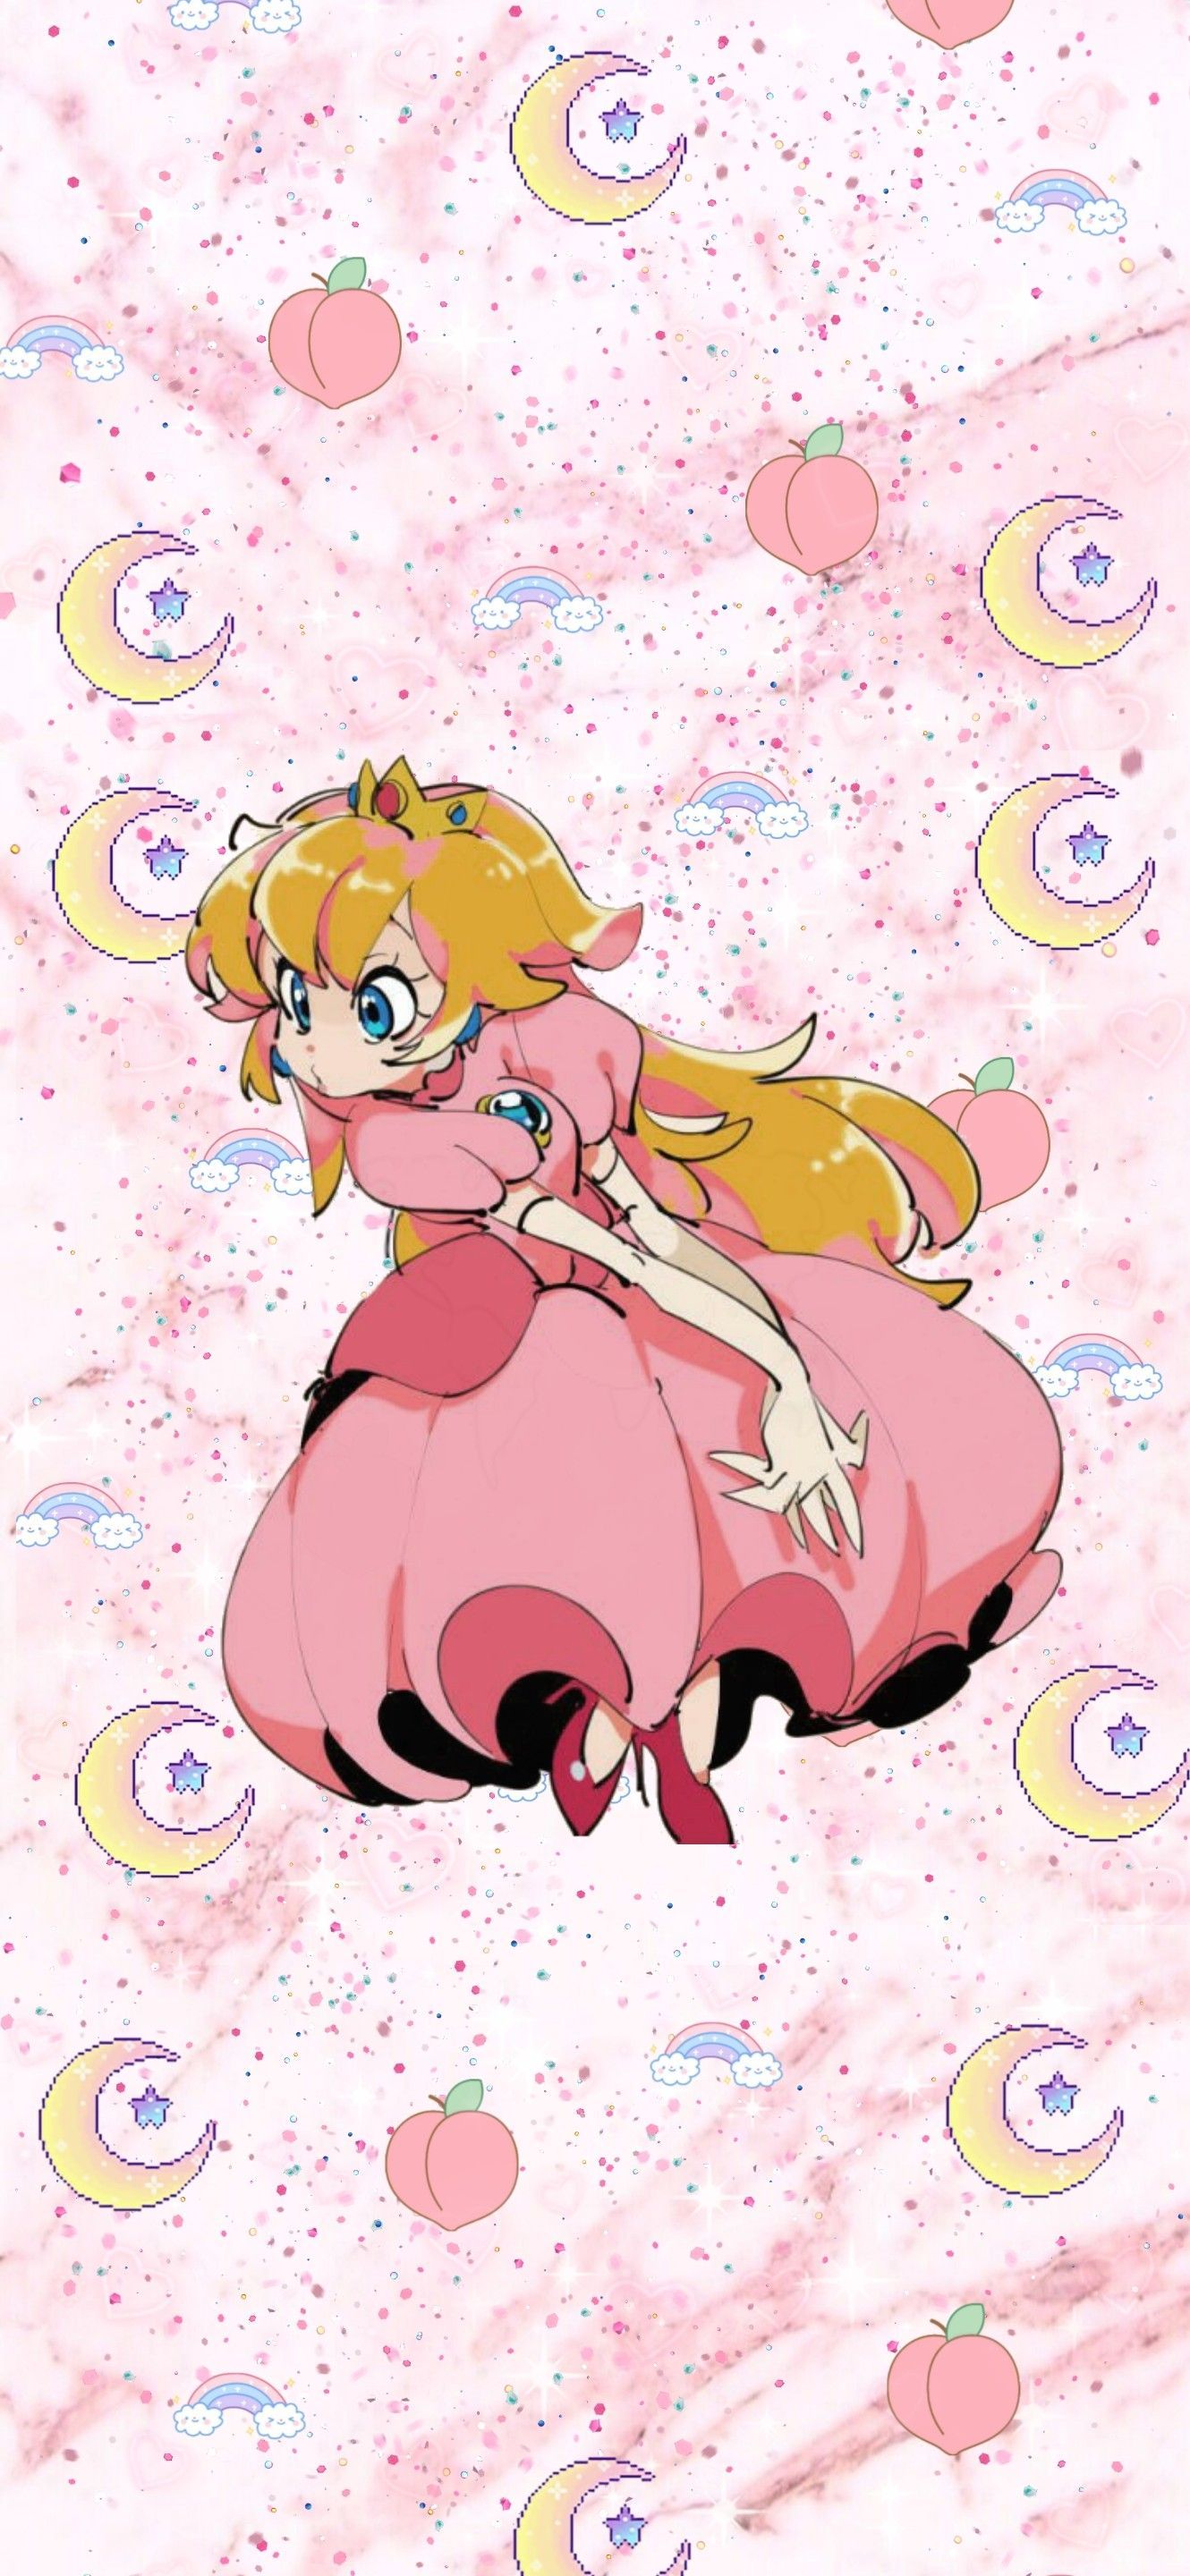  Nintendo Hintergrundbild 1330x2880. Nintendo Princess Peach pink aesthetic Phone Wallpaper. Peach wallpaper, Cute cartoon wallpaper, Cartoon wallpaper